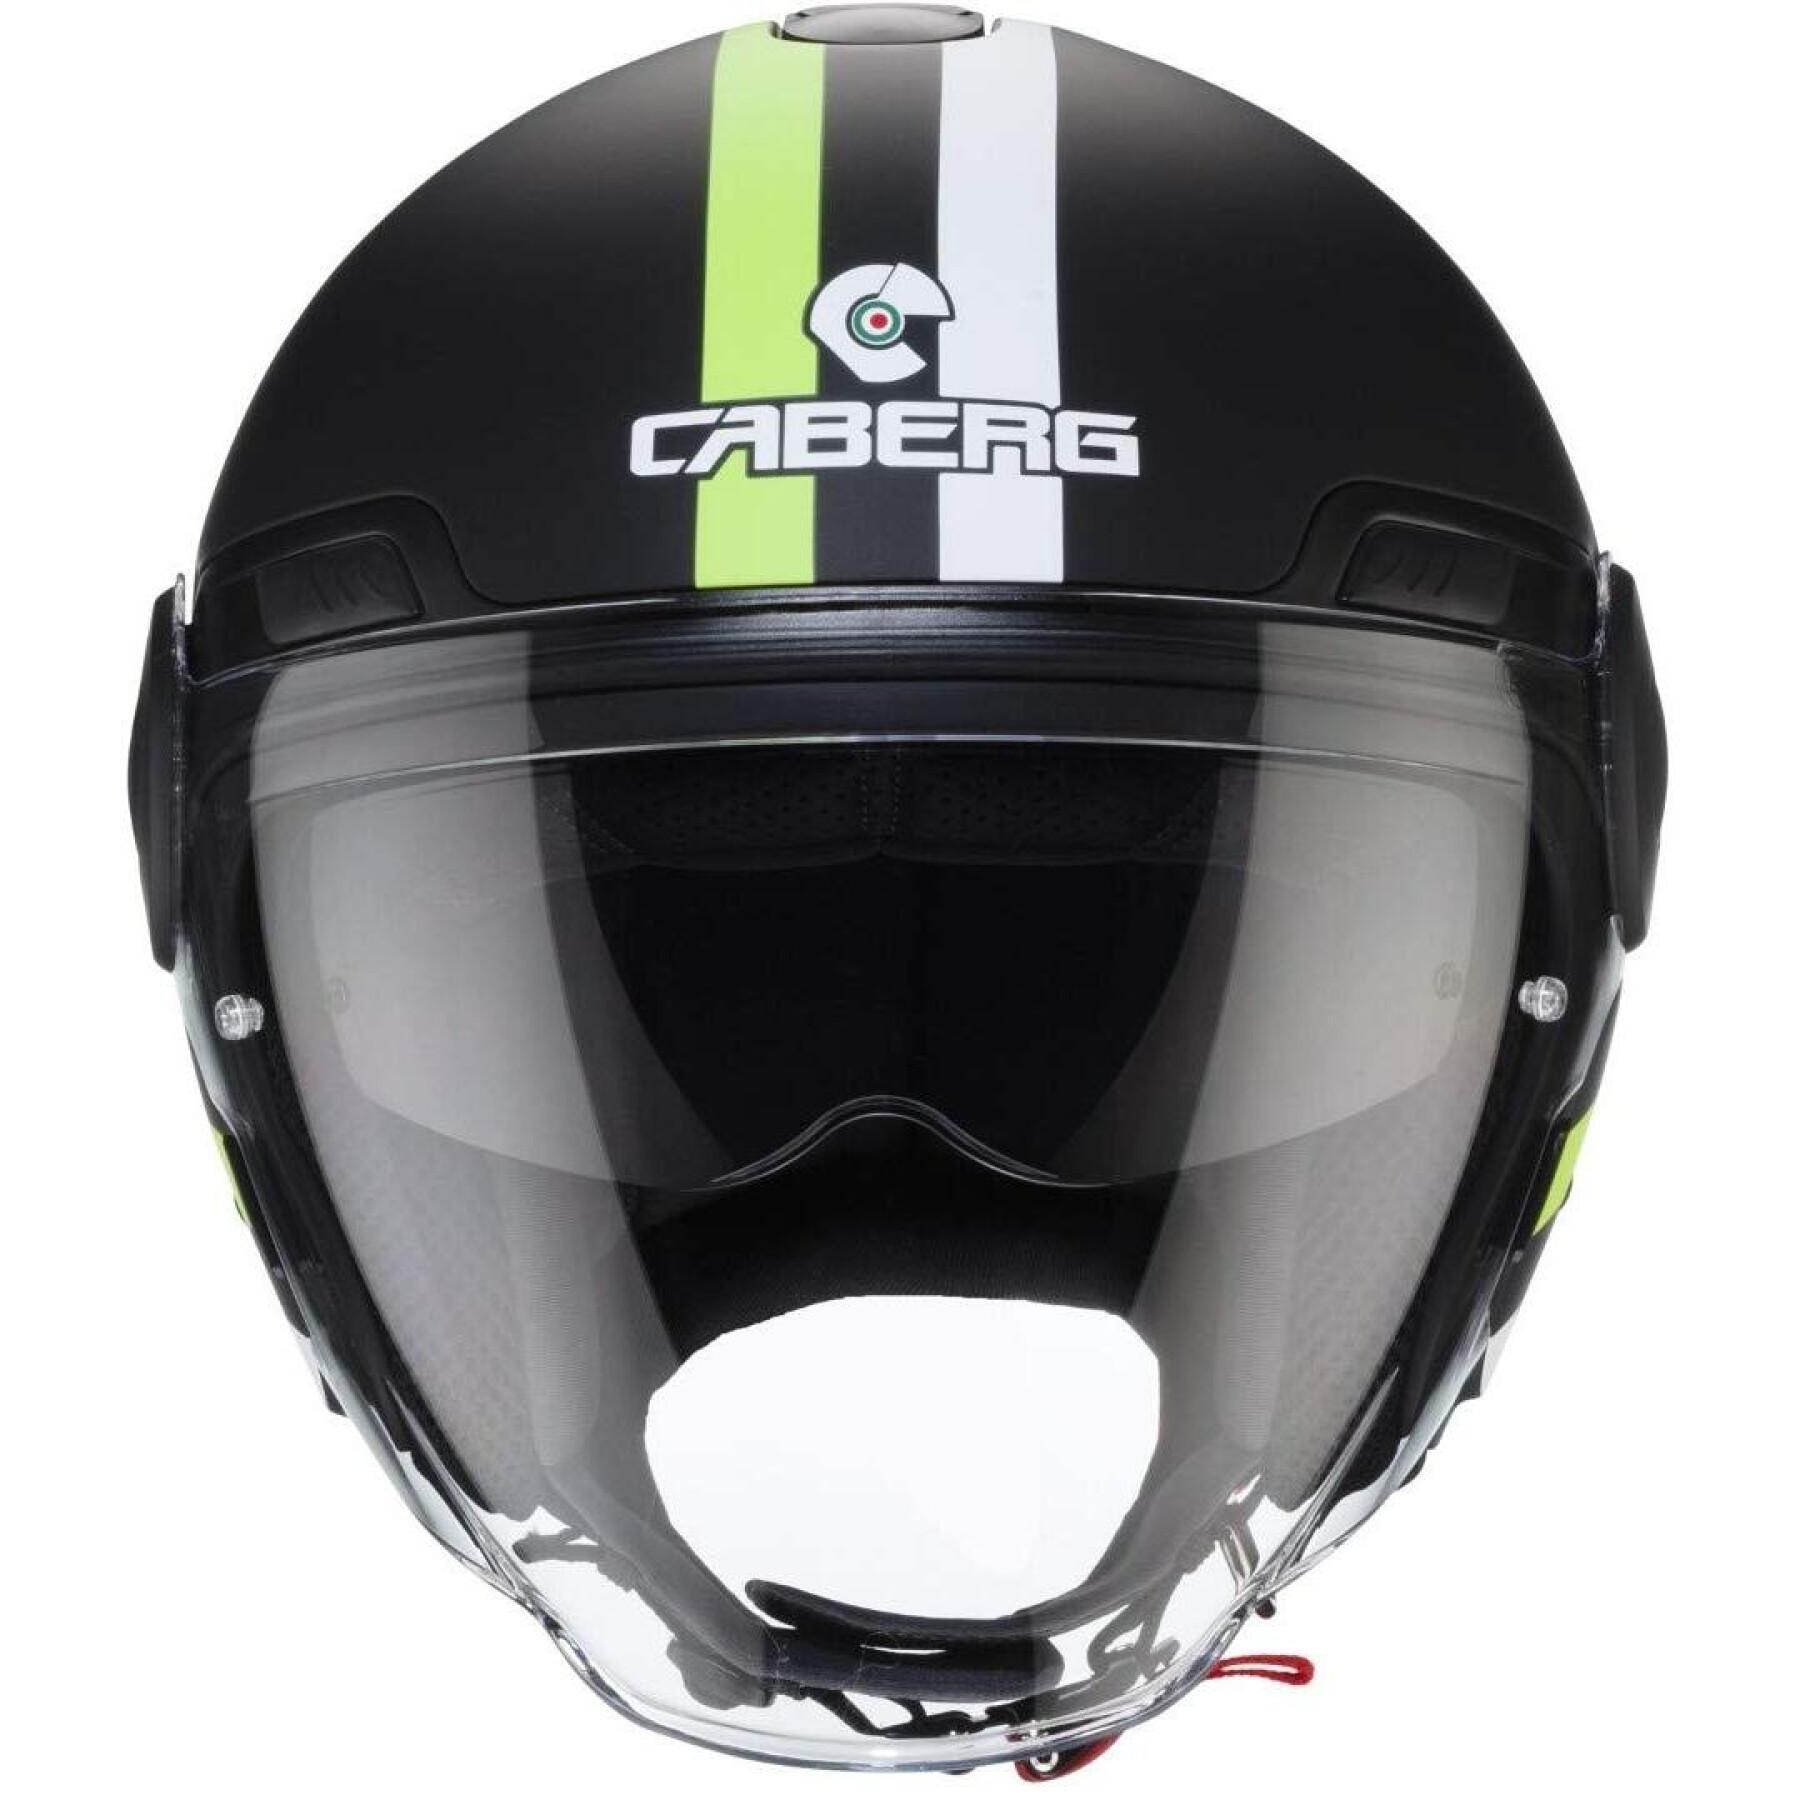 Jet motorcycle helmet Caberg uptown chrono